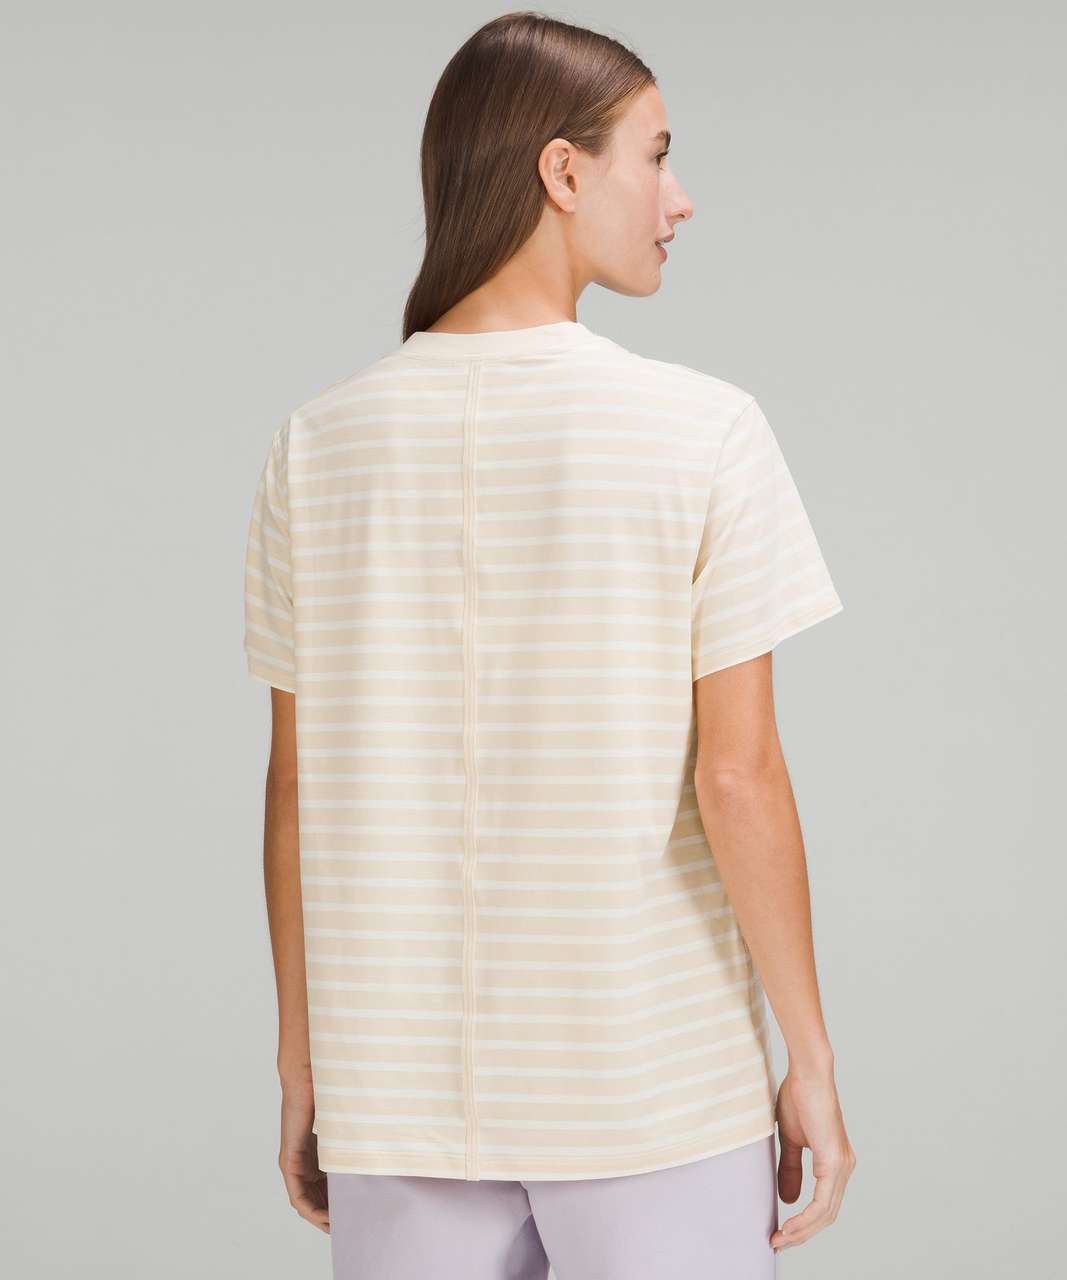 Lululemon All Yours Cotton T-Shirt - Yachtie Stripe Pale Linen Lemon Sorbet